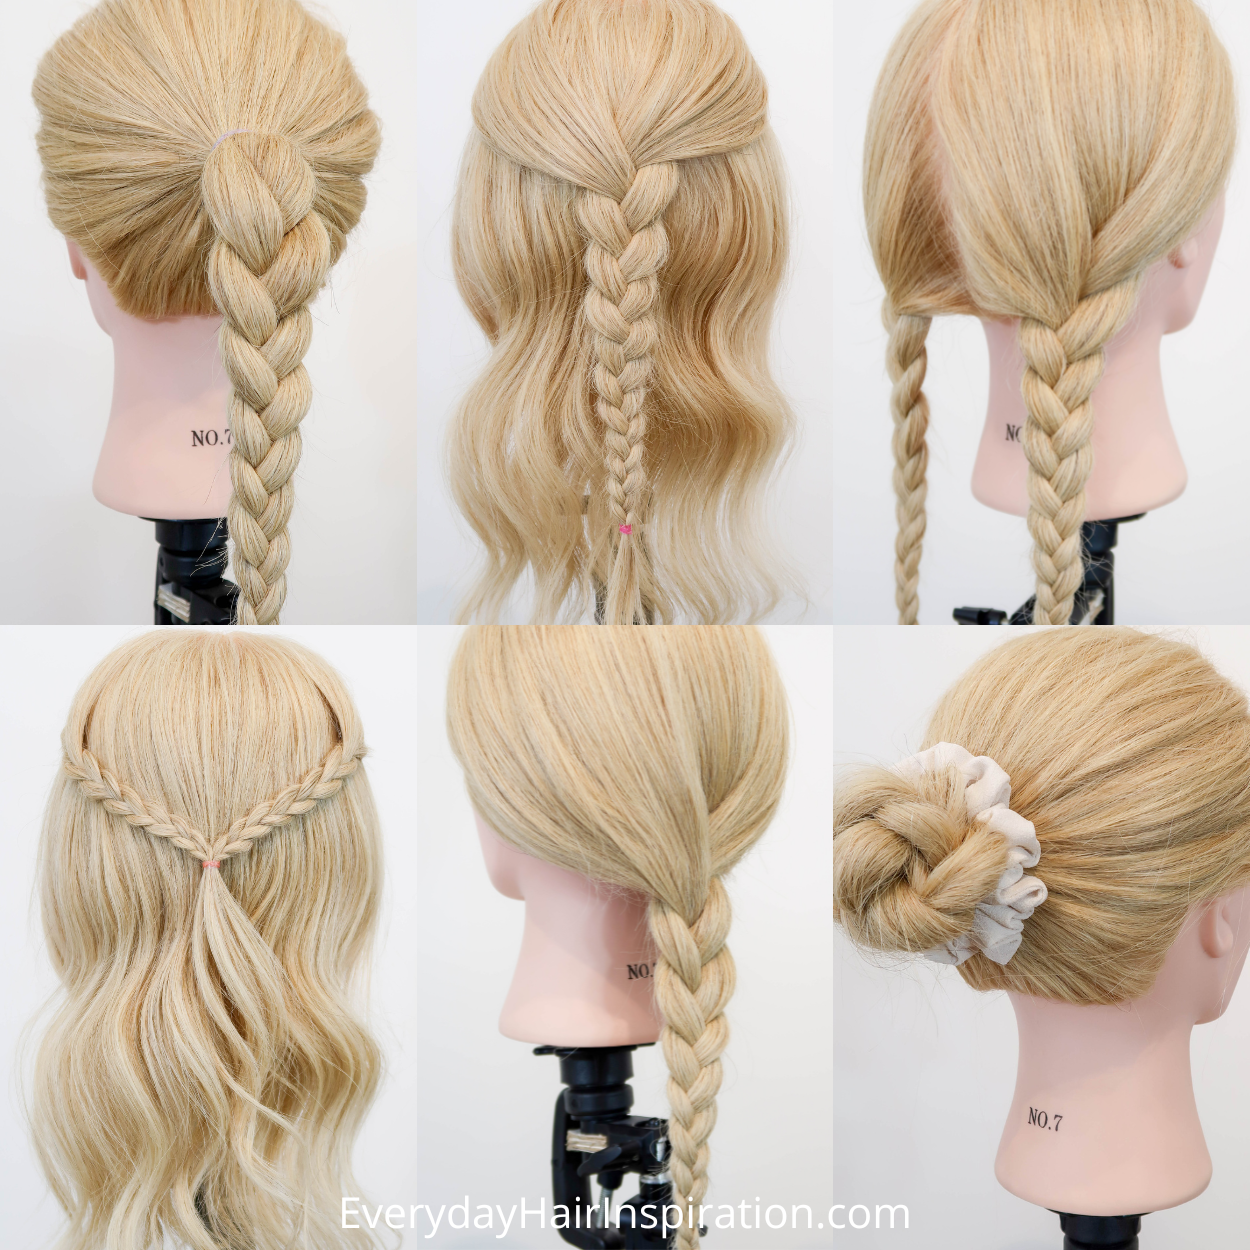 Easy Hairstyles For Beginners - 1 braid 6 hairstyles (Basic 3 Strand Braid)  - Everyday Hair inspiration